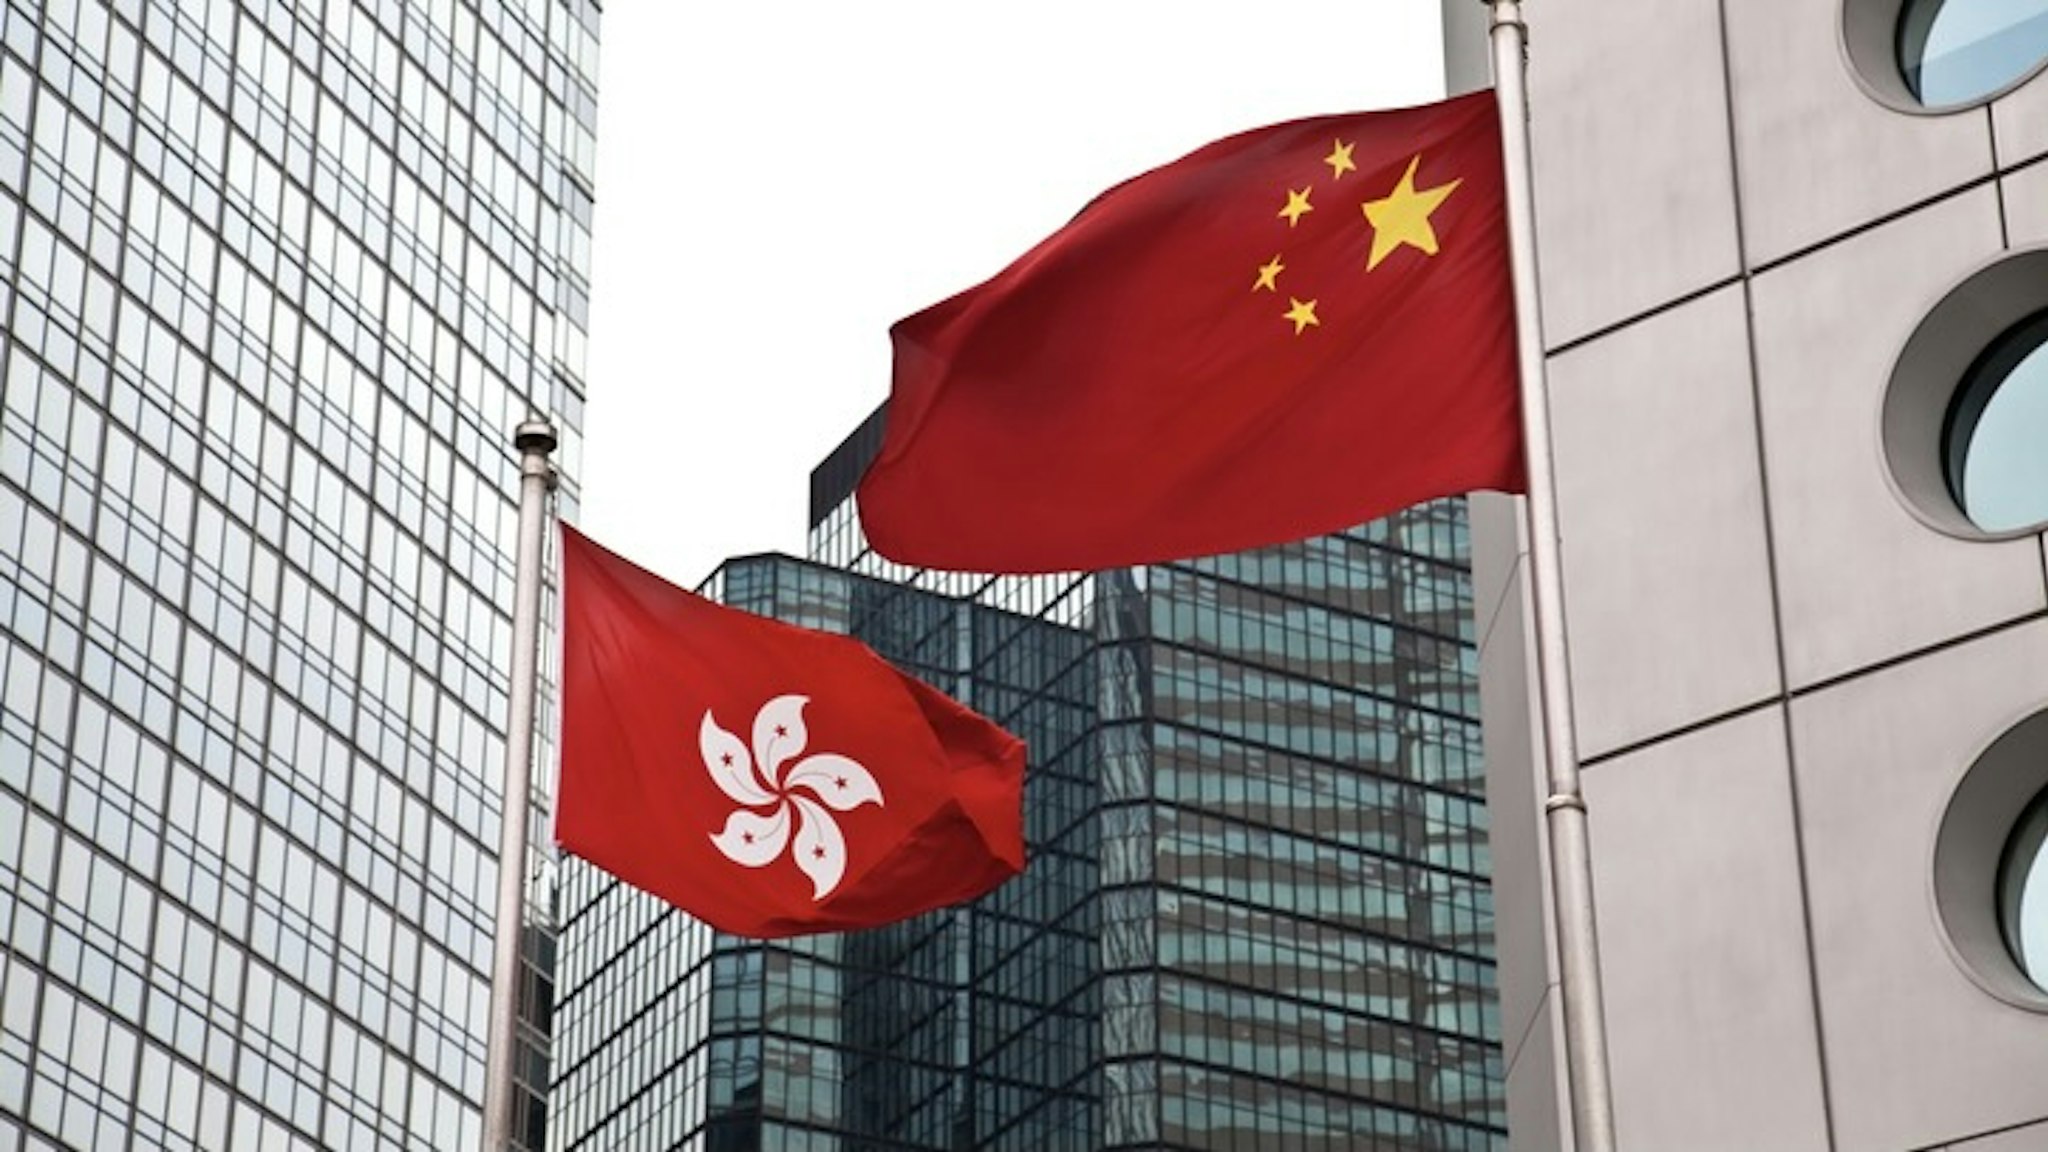 Hong Kong and China - stock photo Hong Kong and China flags against commercial buildings ymgerman via Getty Images